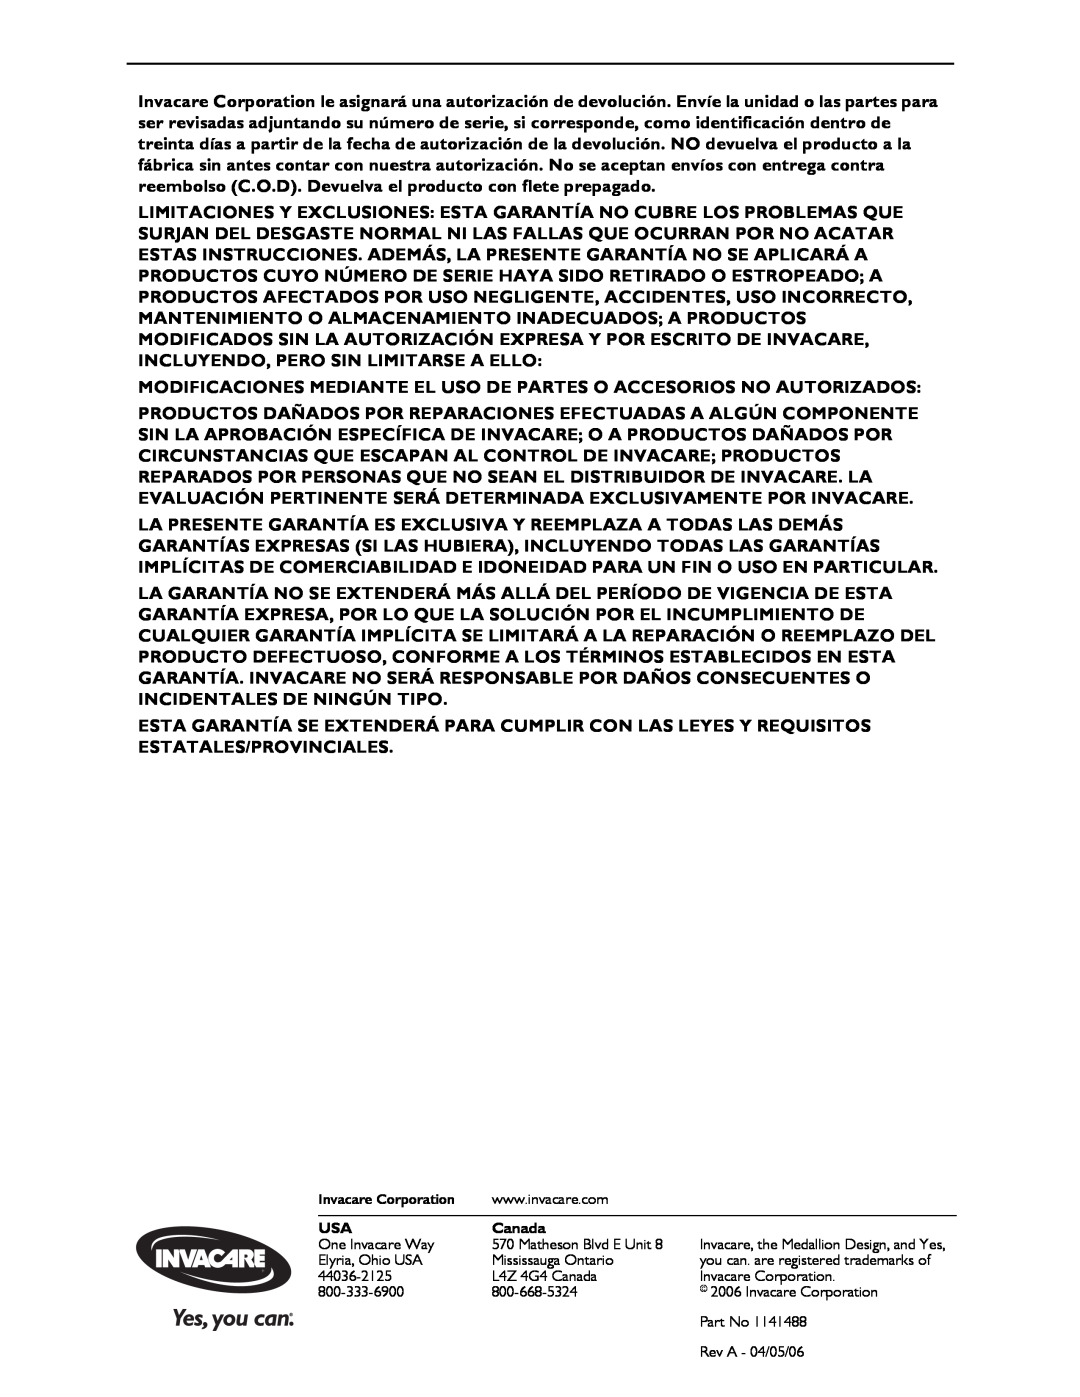 Invacare 710 instruction sheet Canada 